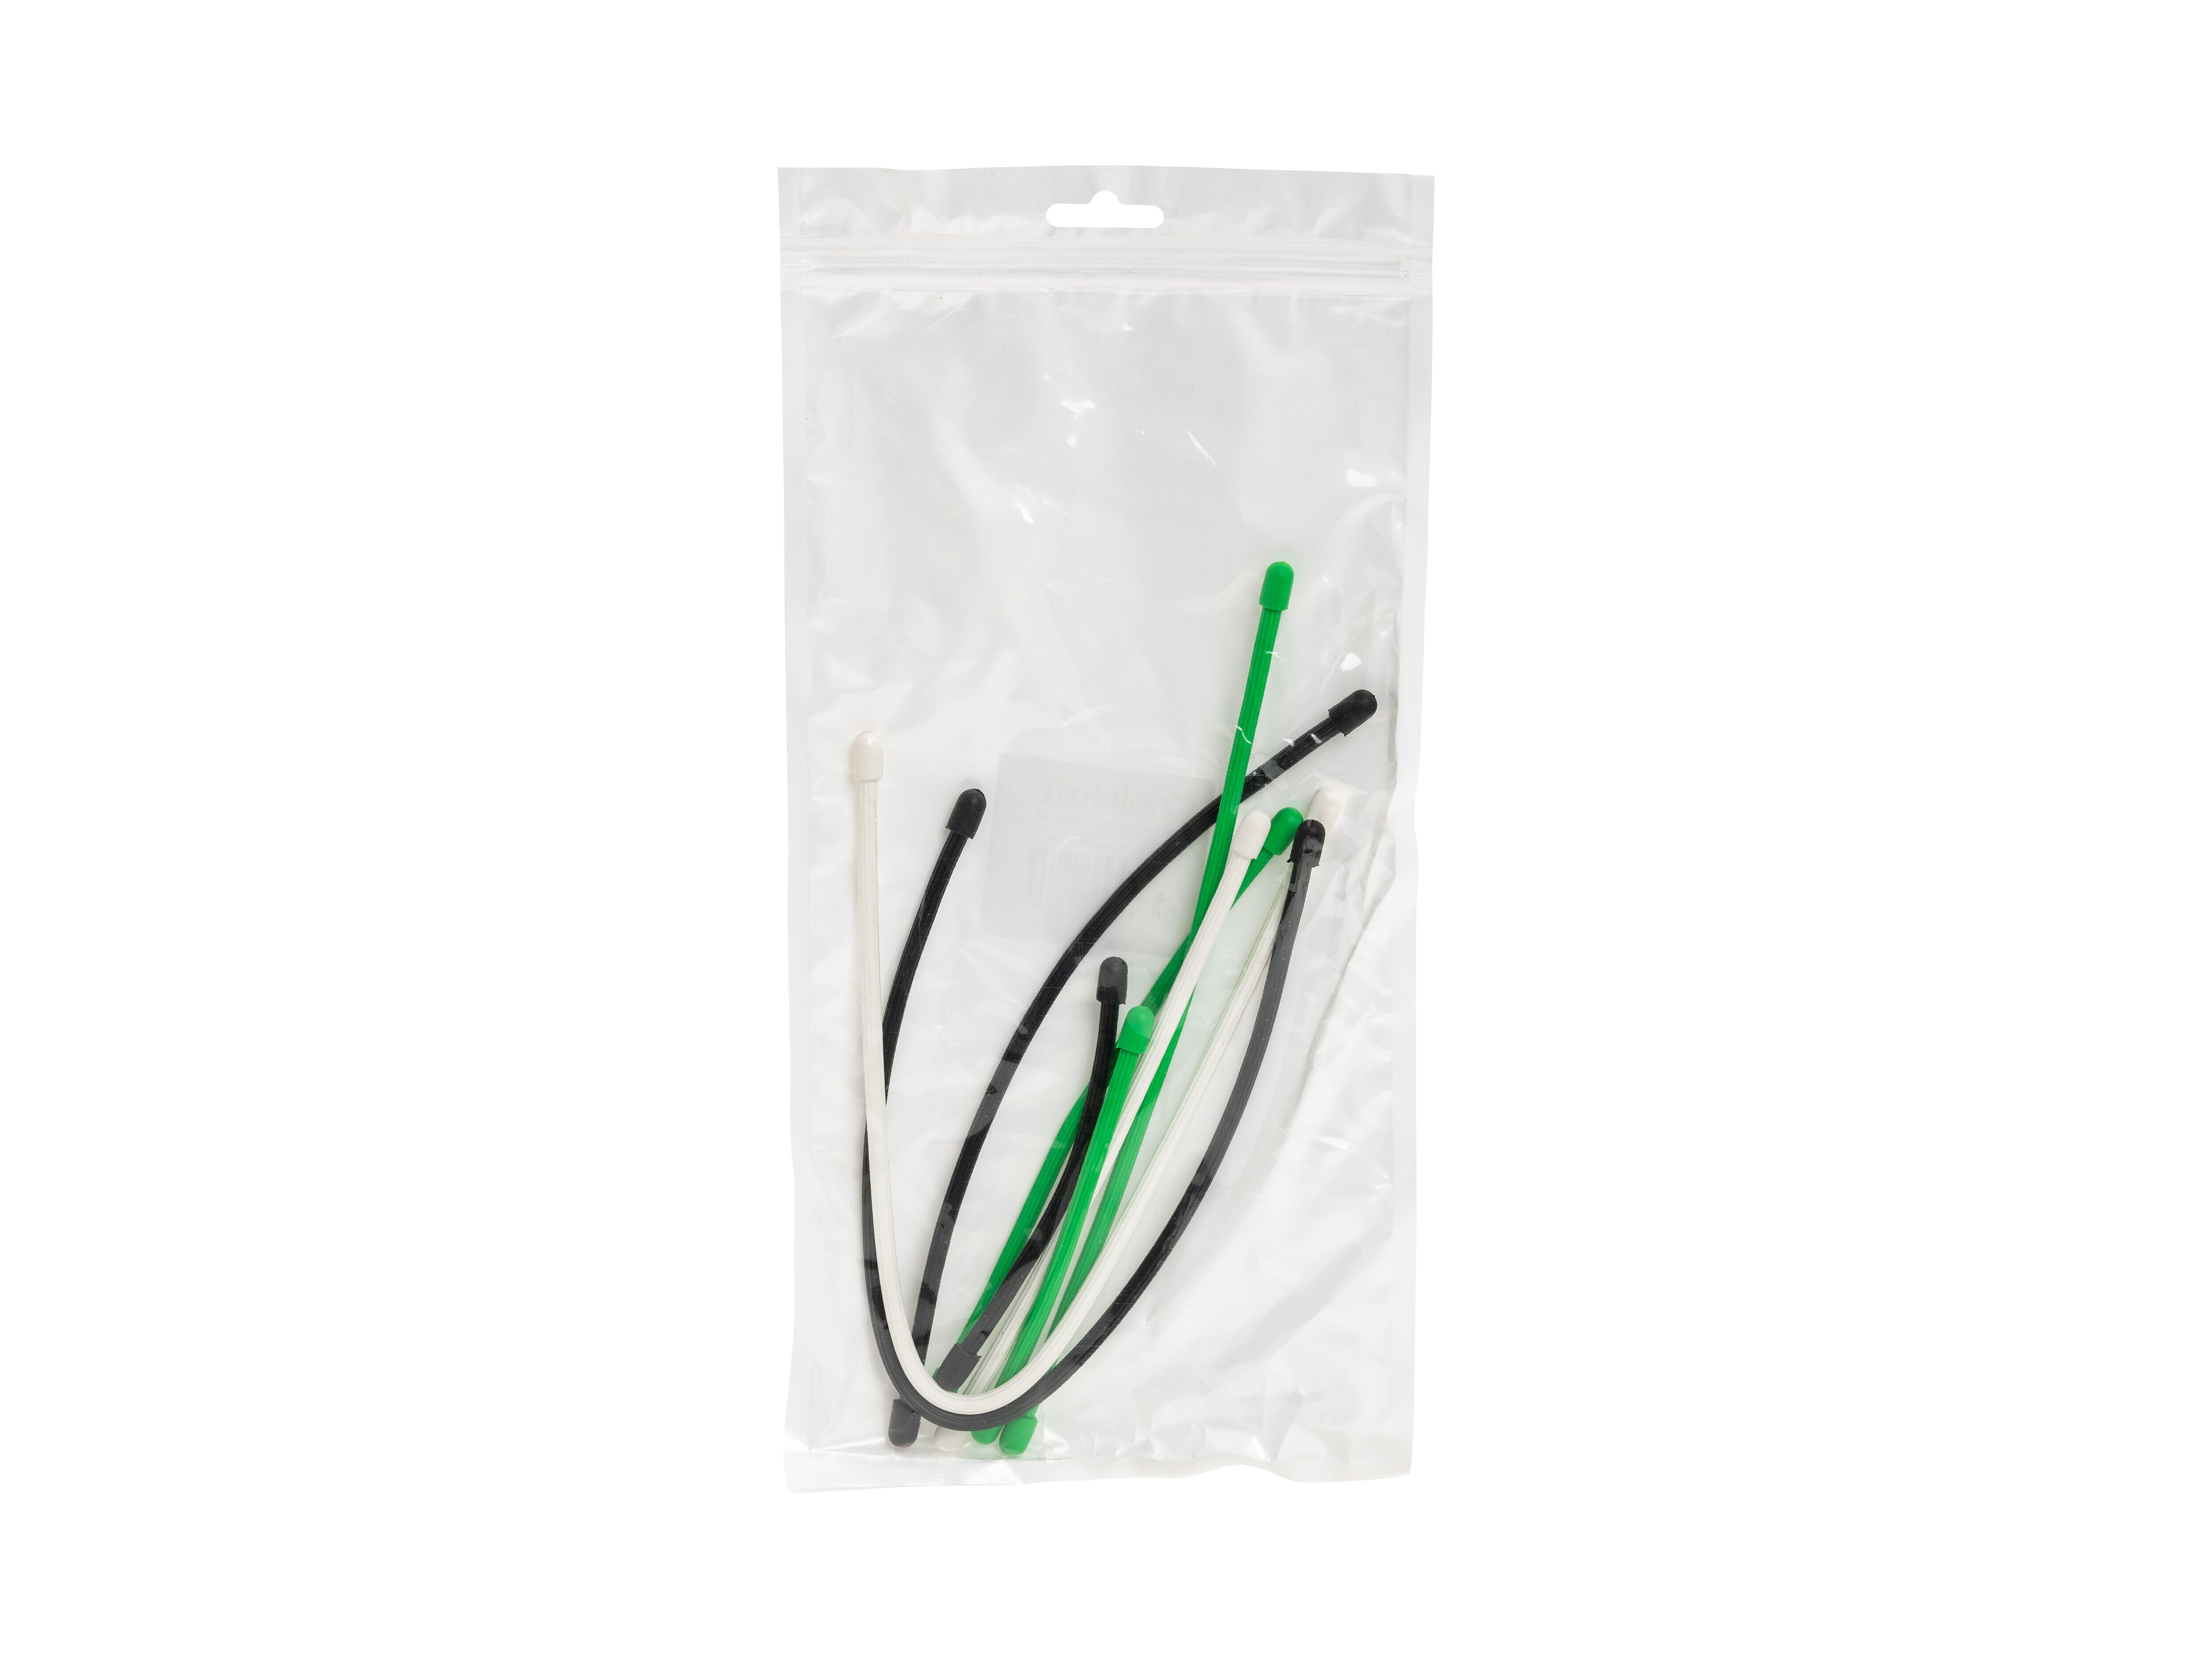 Kaufe Flexible Kabelbinder Aus Silikon 8er-Pack ➡️ Online auf Coolstuff